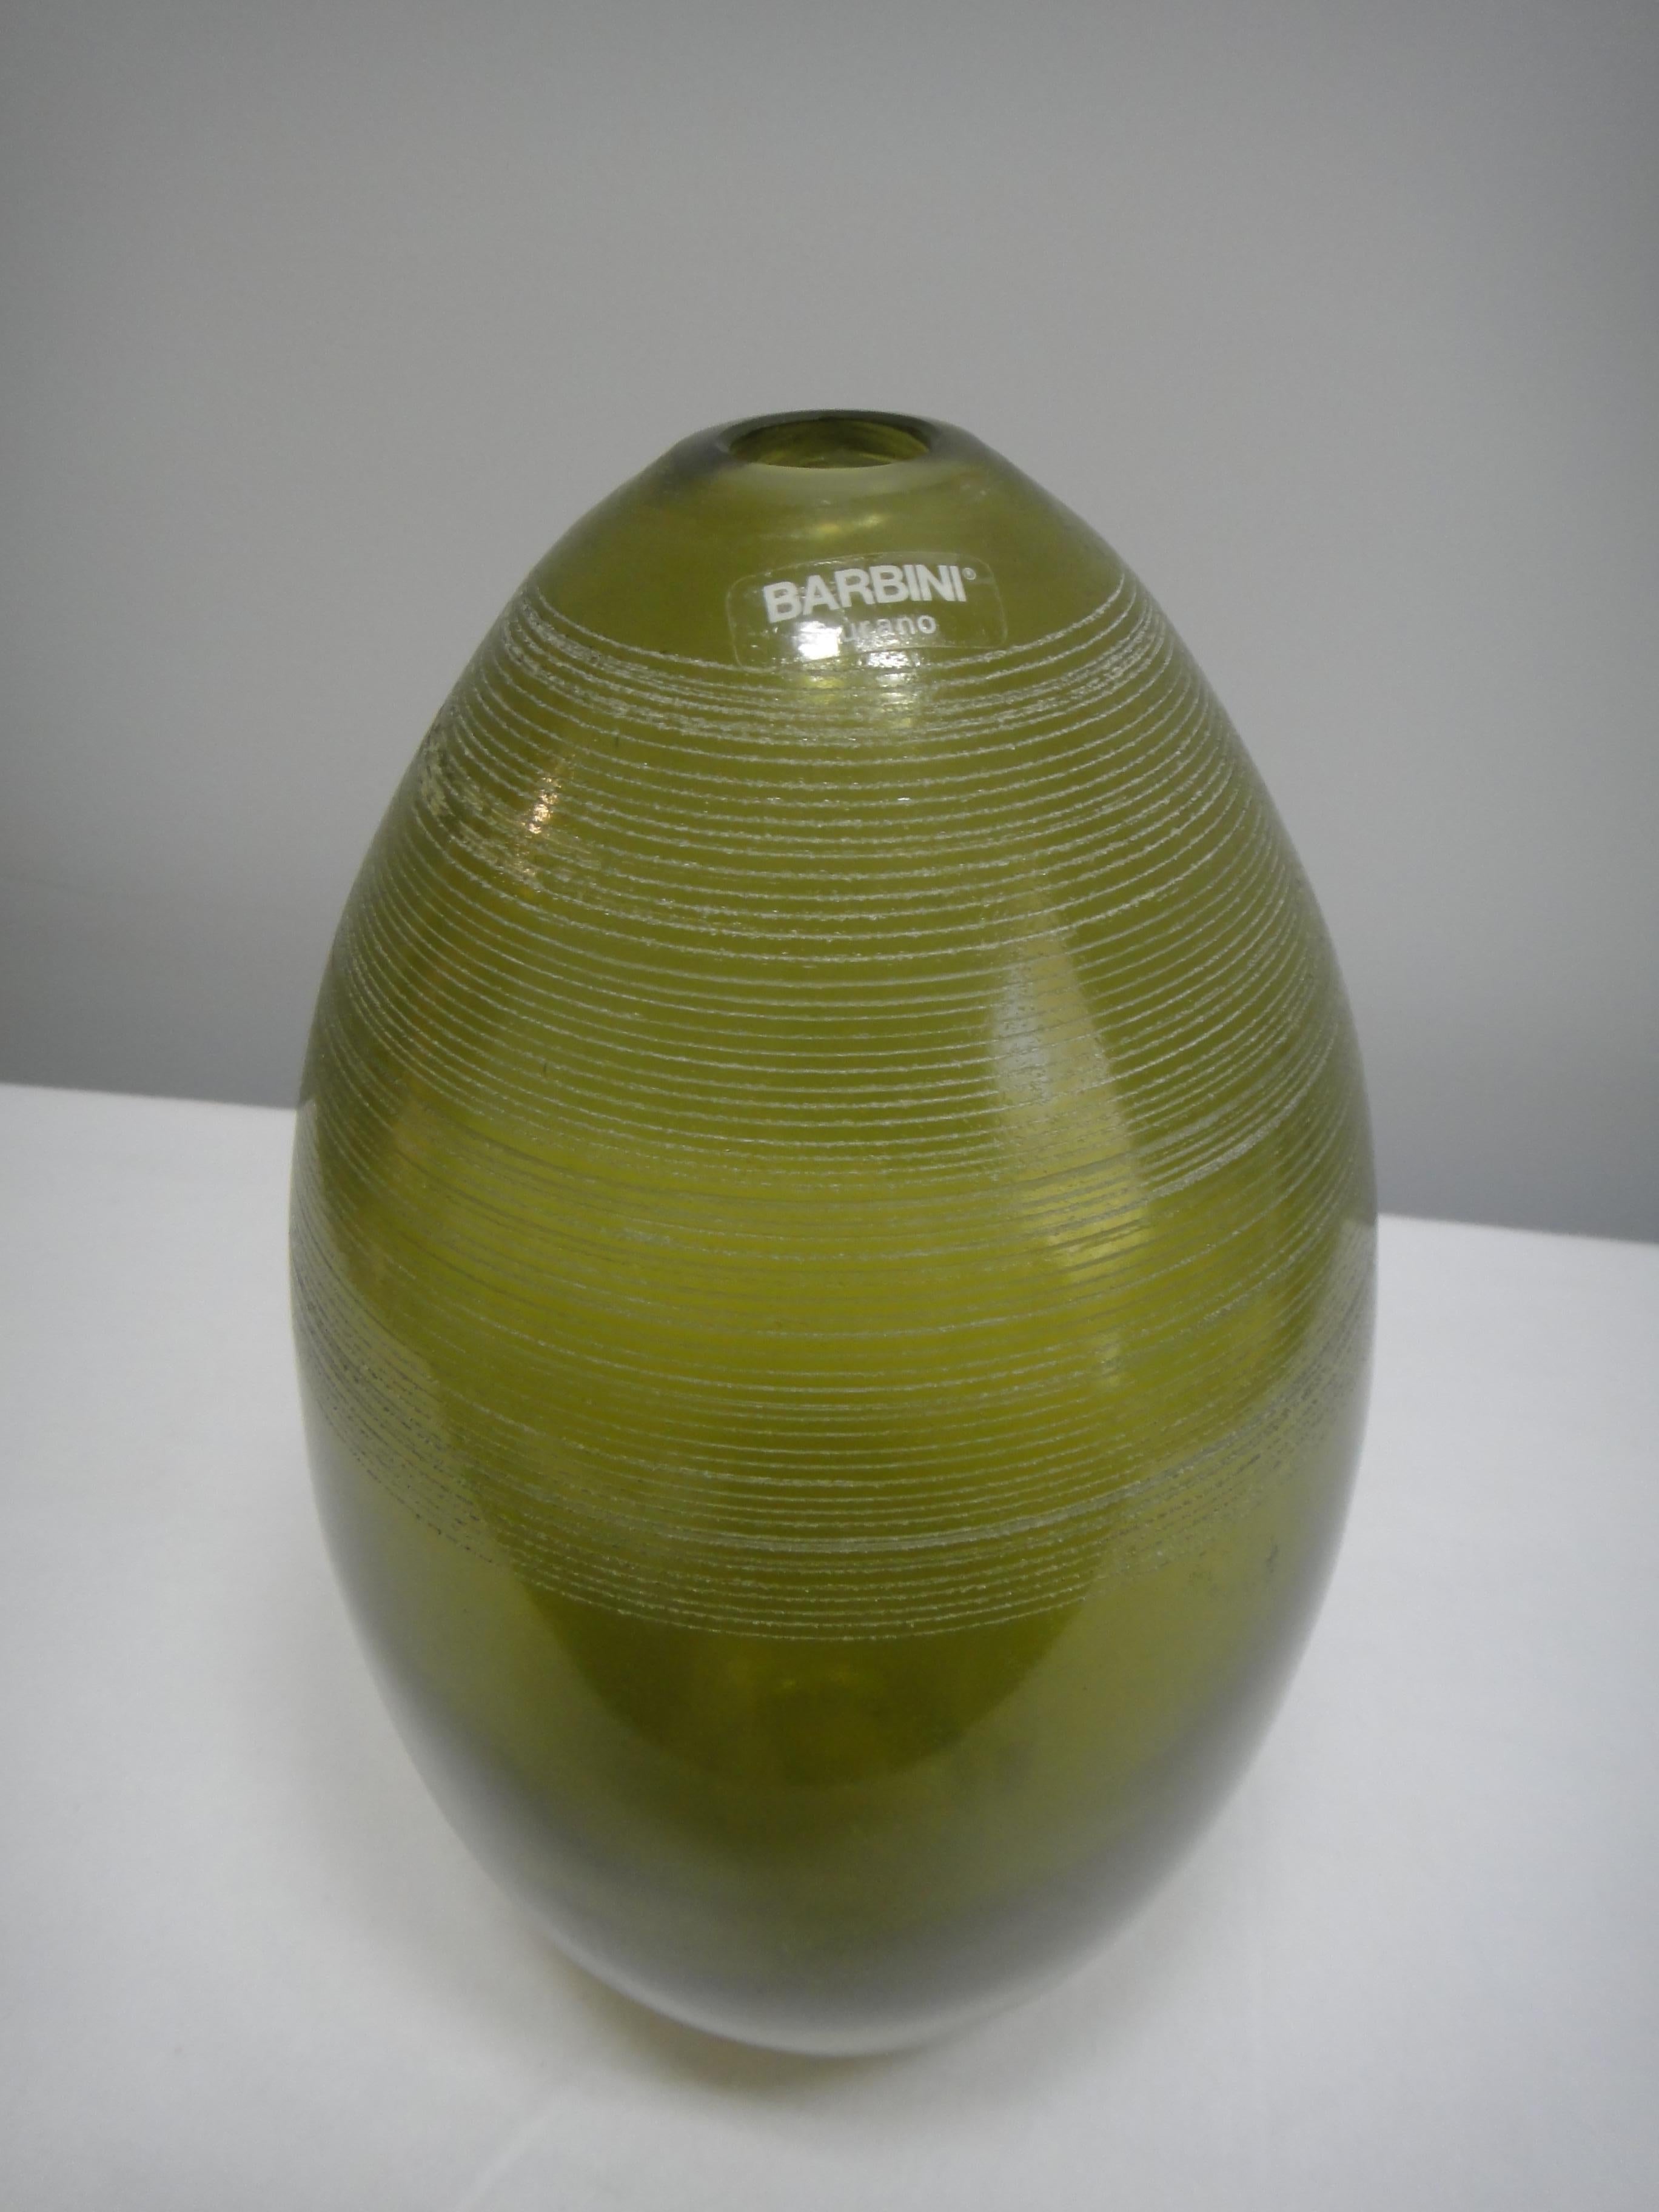 Barbini Murano Glass Vase Green, Italy For Sale 4